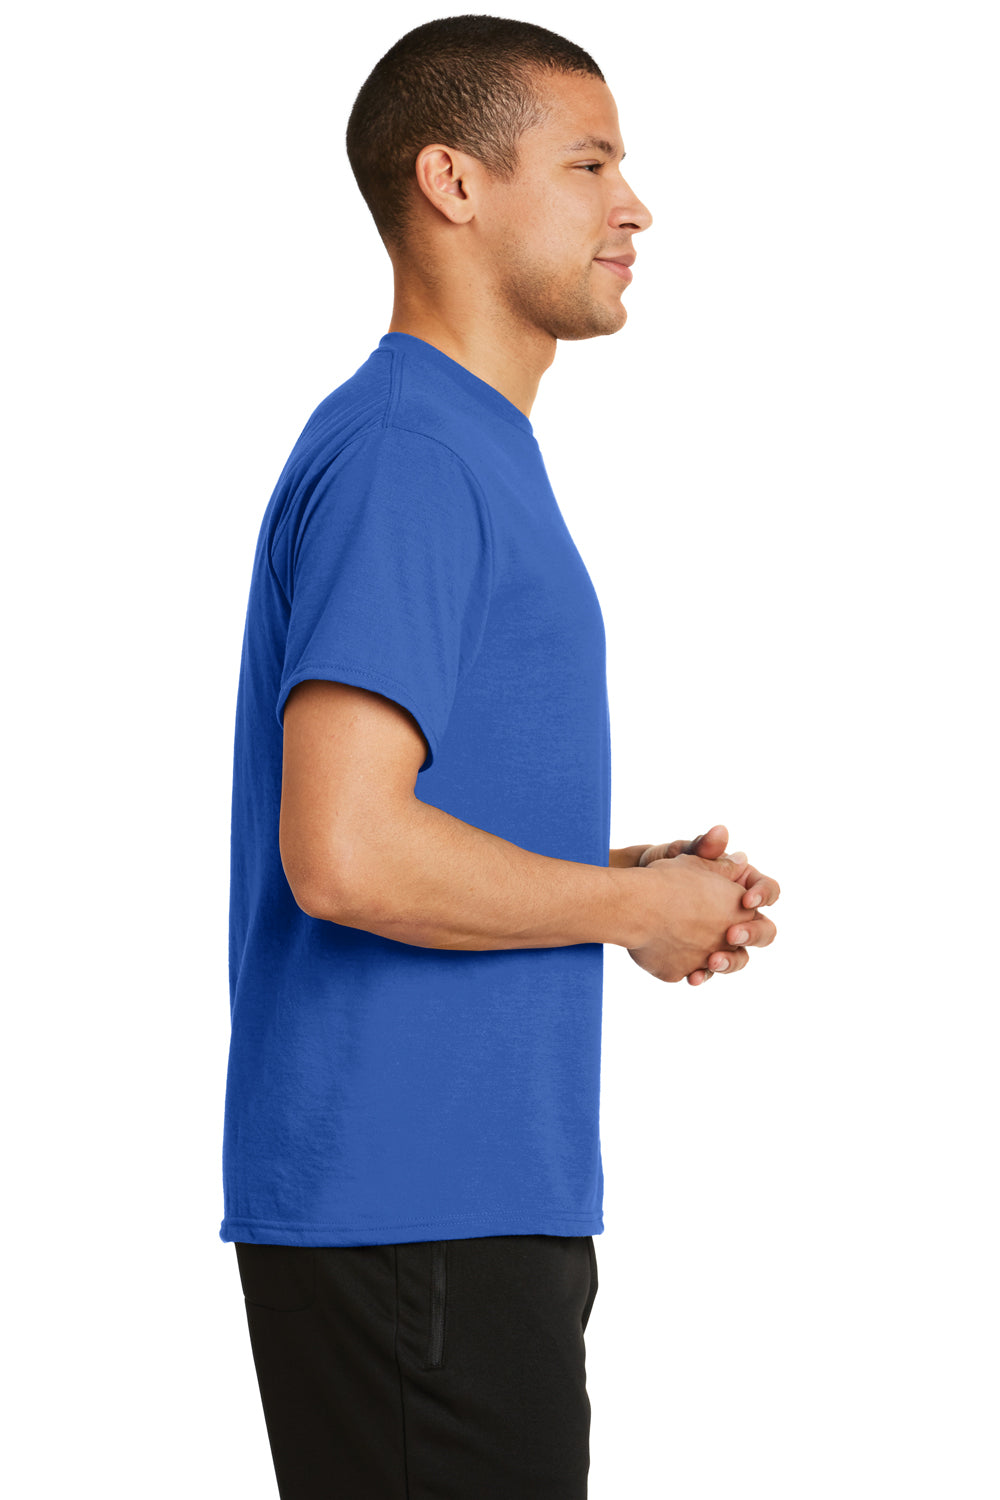 Port & Company PC381 Mens Dry Zone Performance Moisture Wicking Short Sleeve Crewneck T-Shirt Royal Blue Side